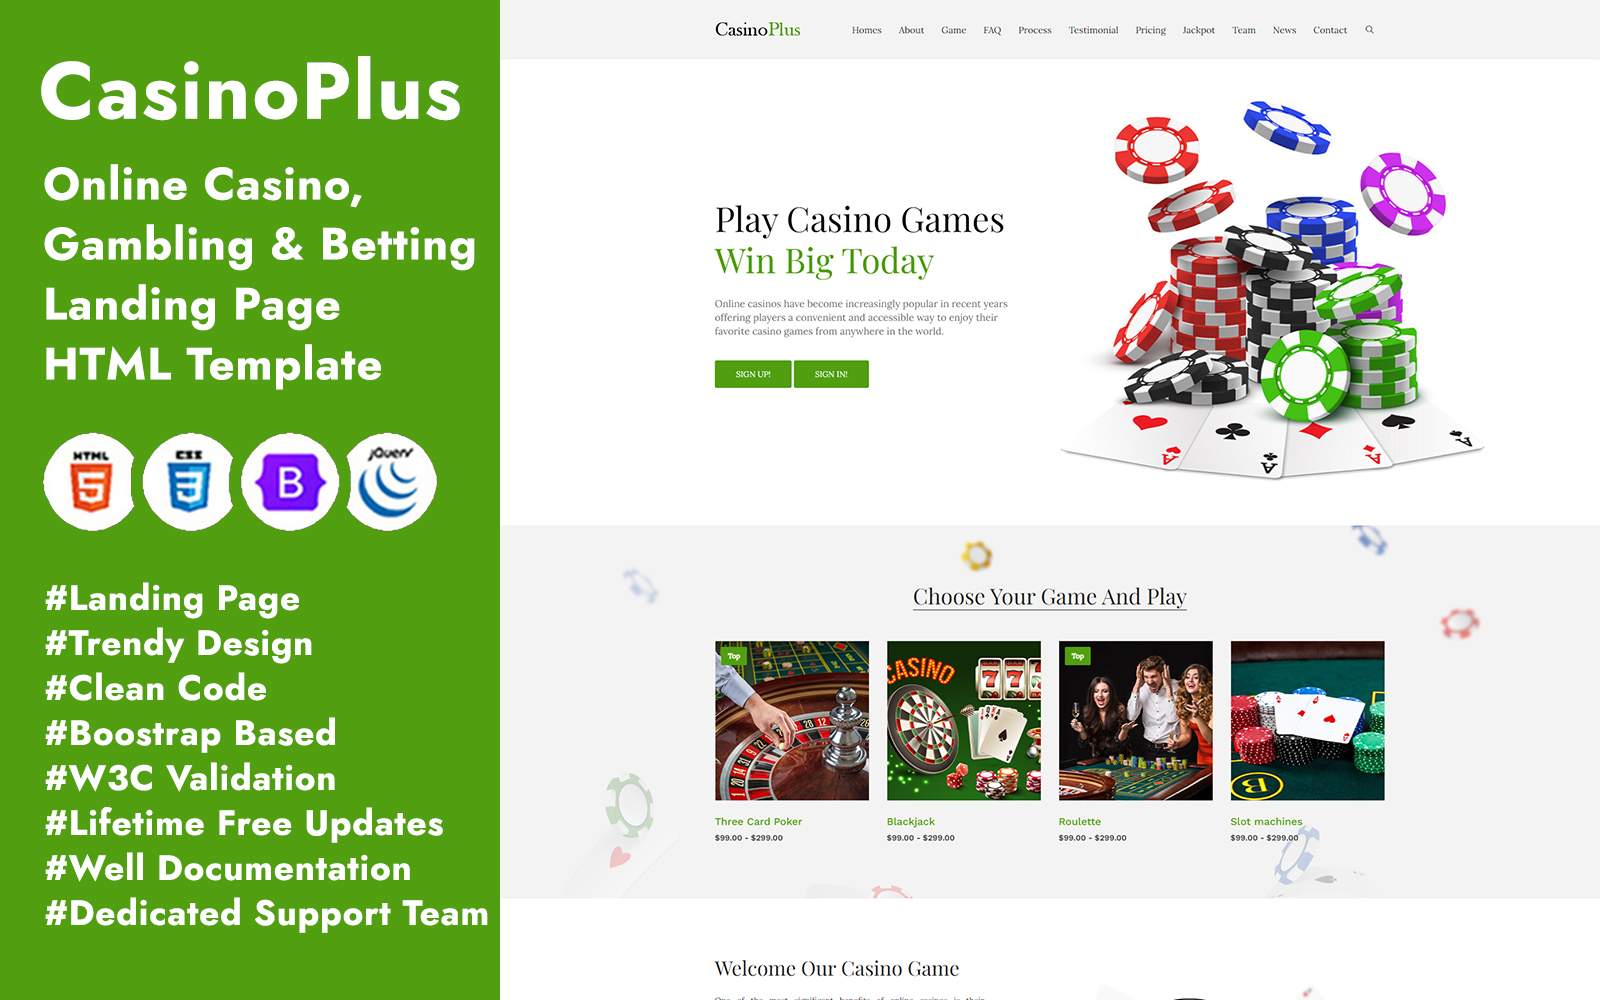 CasinoPlus - Online Casino, Gambling & Betting Landing Page HTML Template